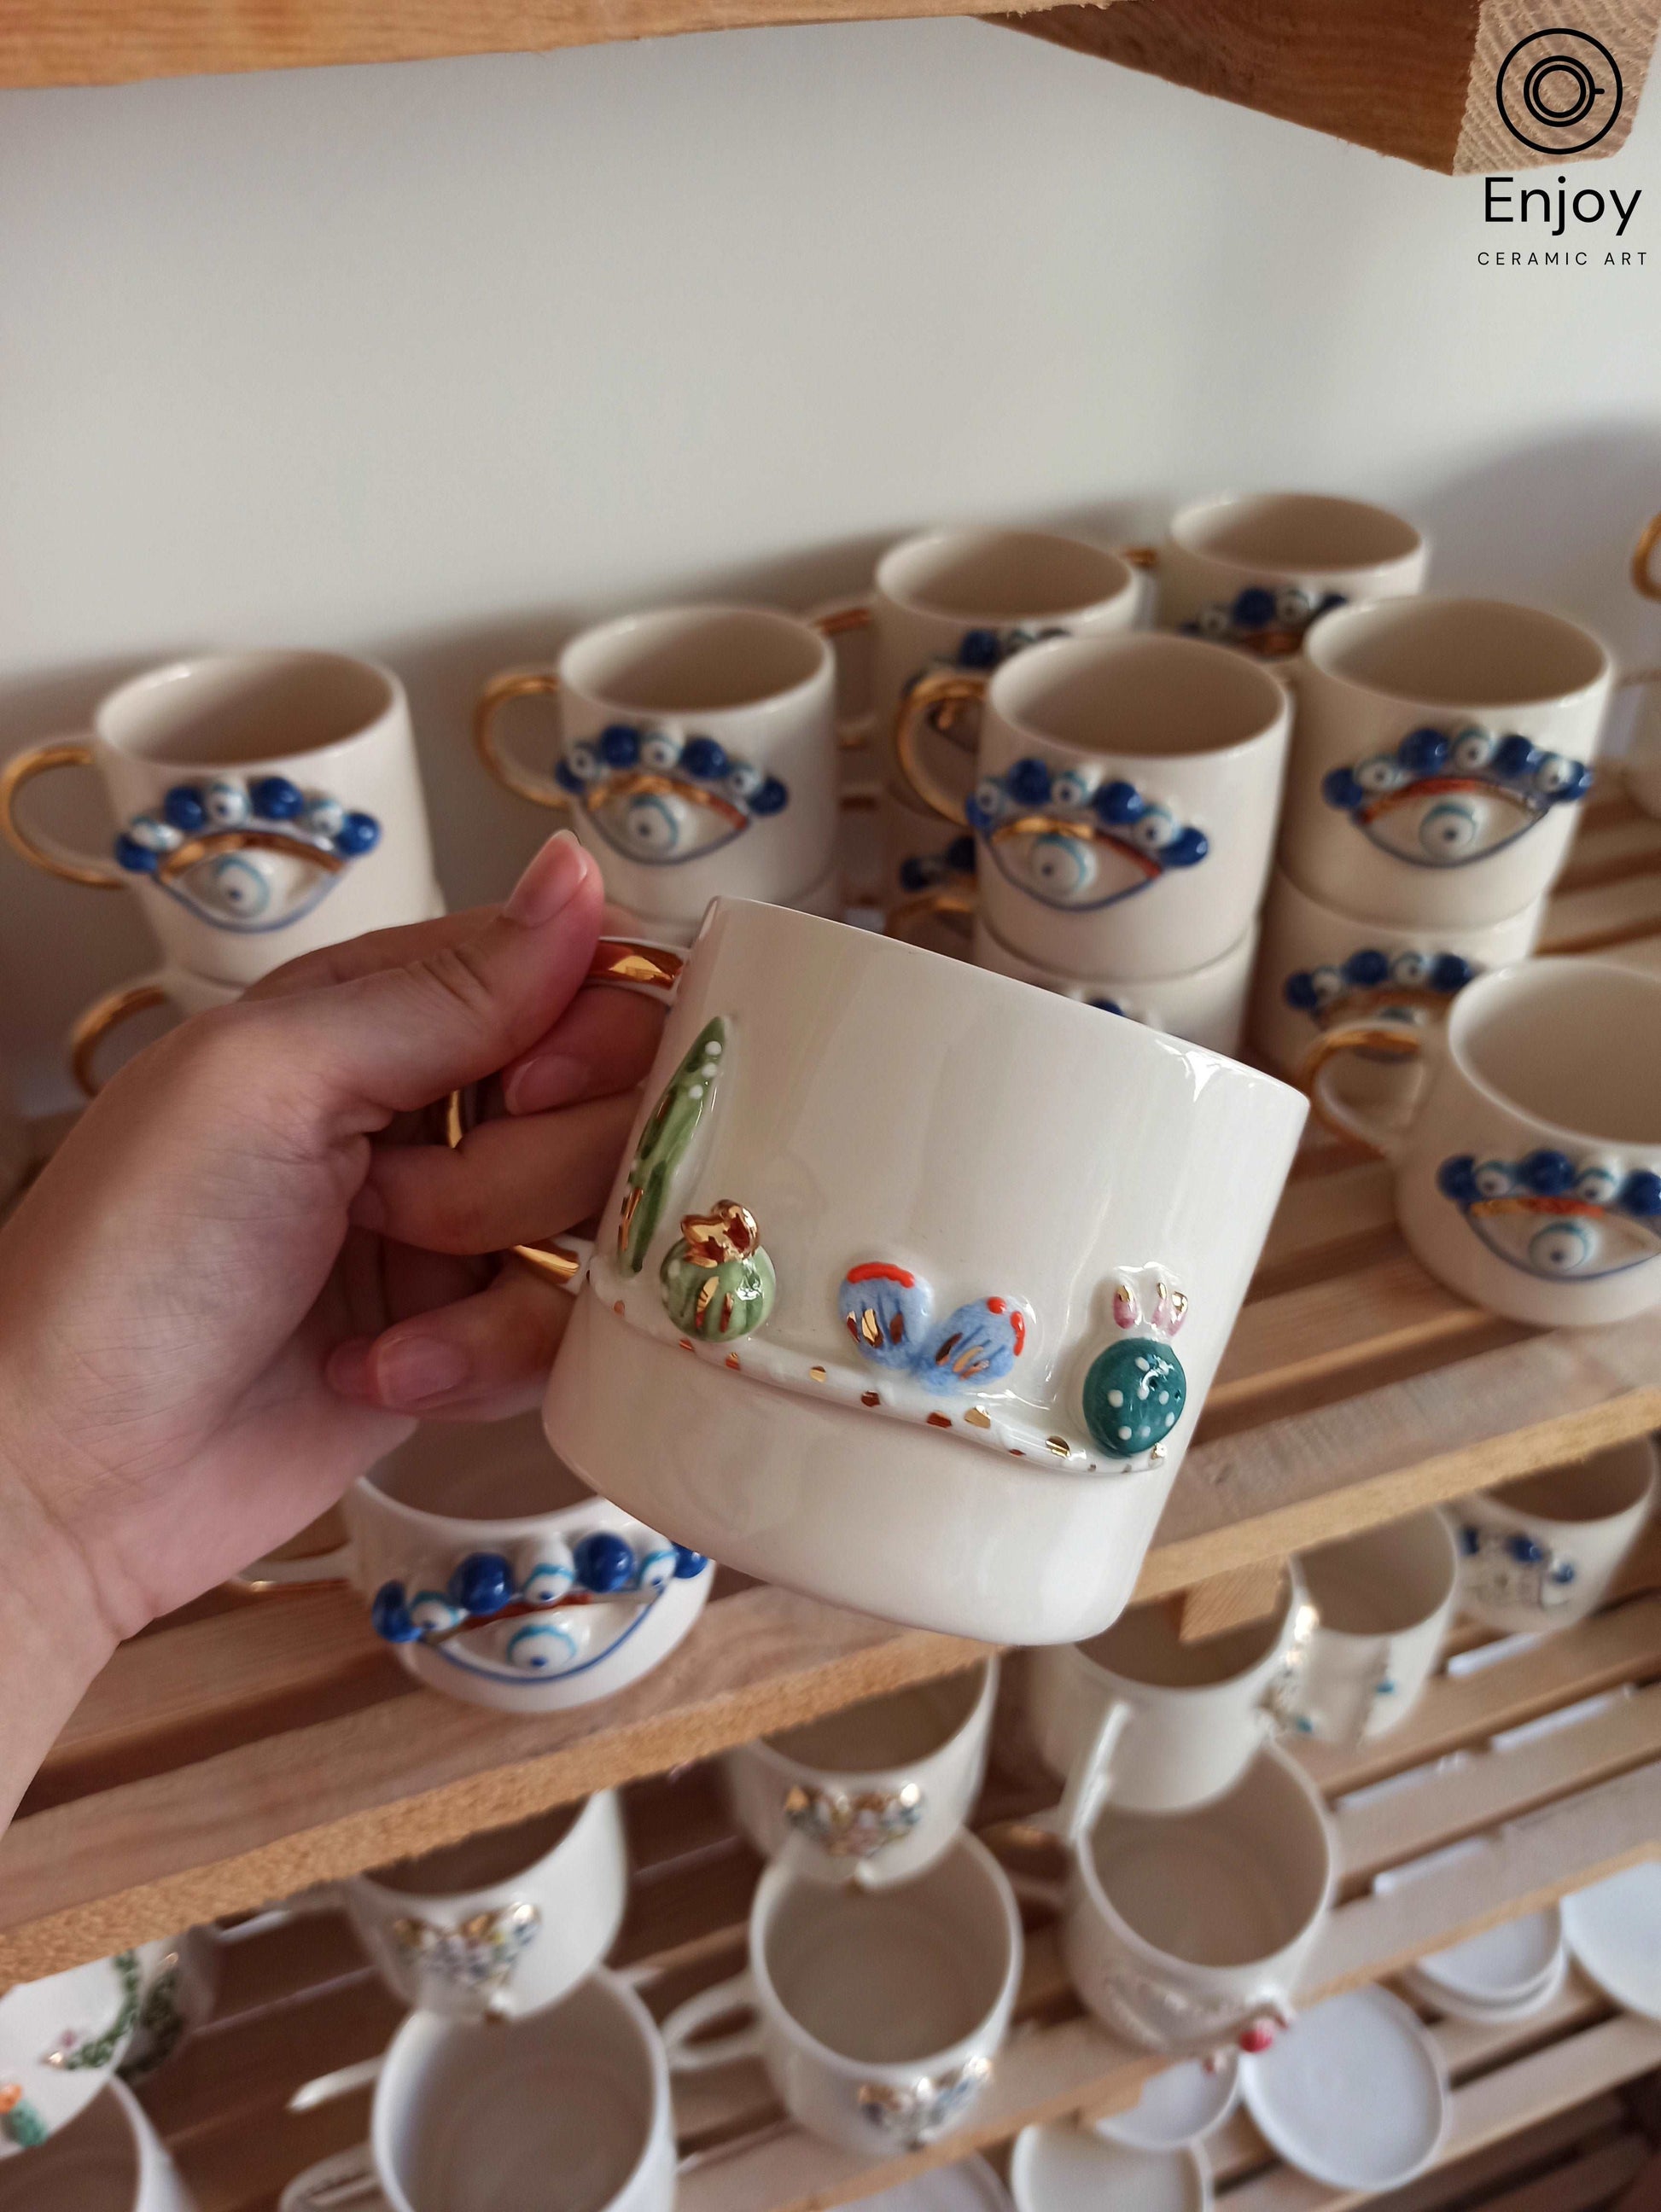 Handcrafted Cactus Ceramic Coffee Mug - Unique Hand Thrown Pottery